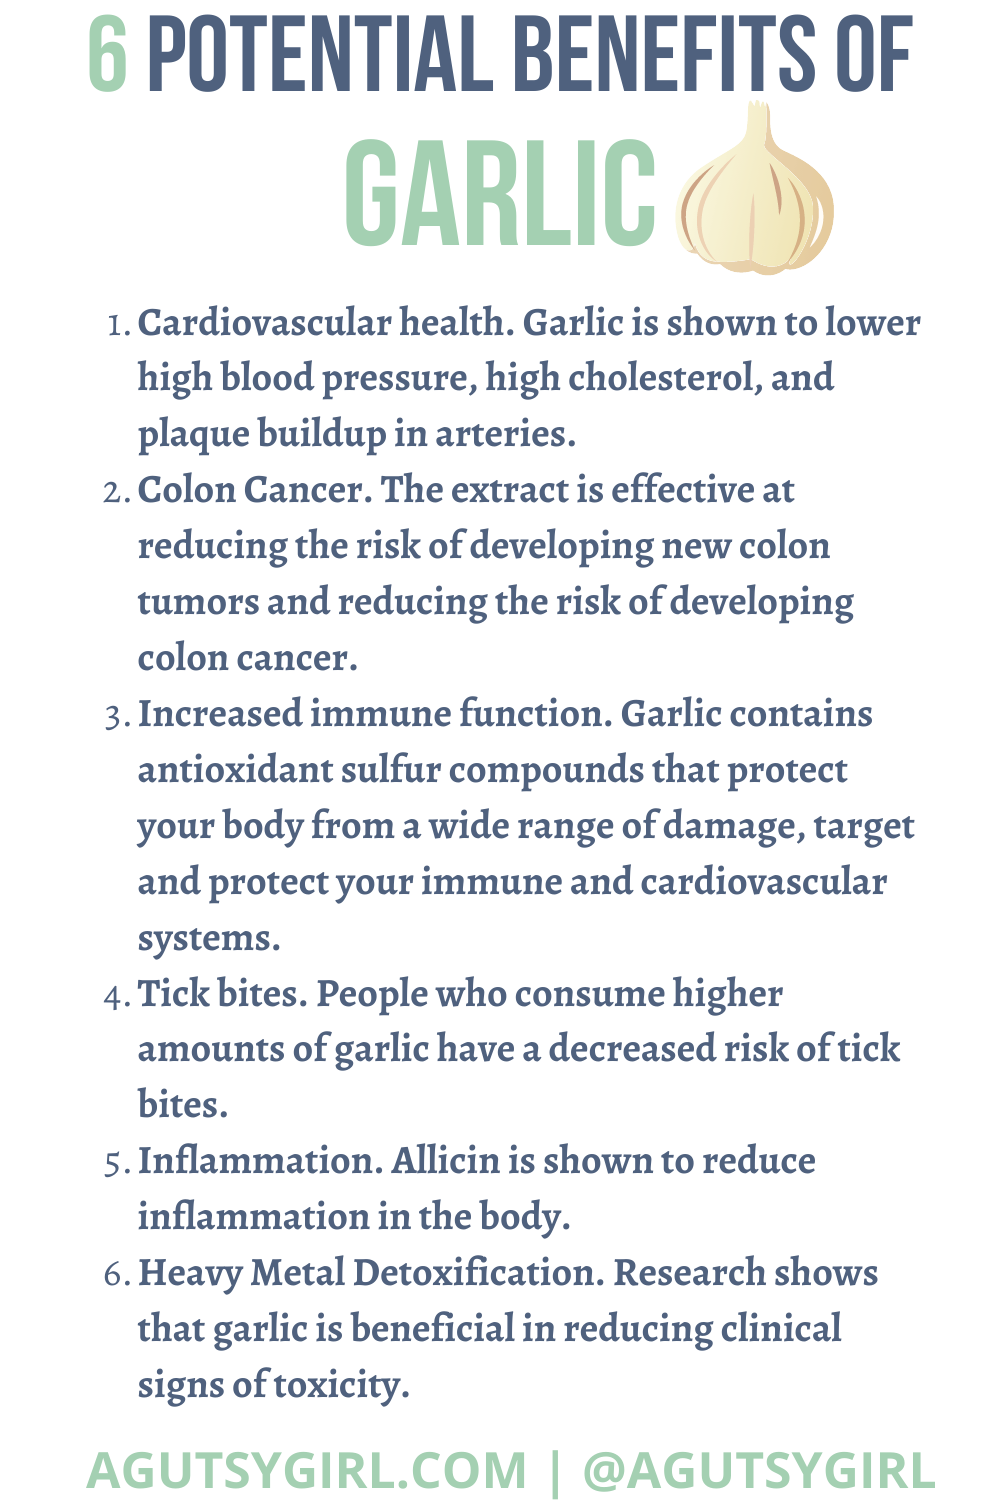 6 Potential Benefits Too much garlic agutsygirl.com #fodmap #garlic #sibo